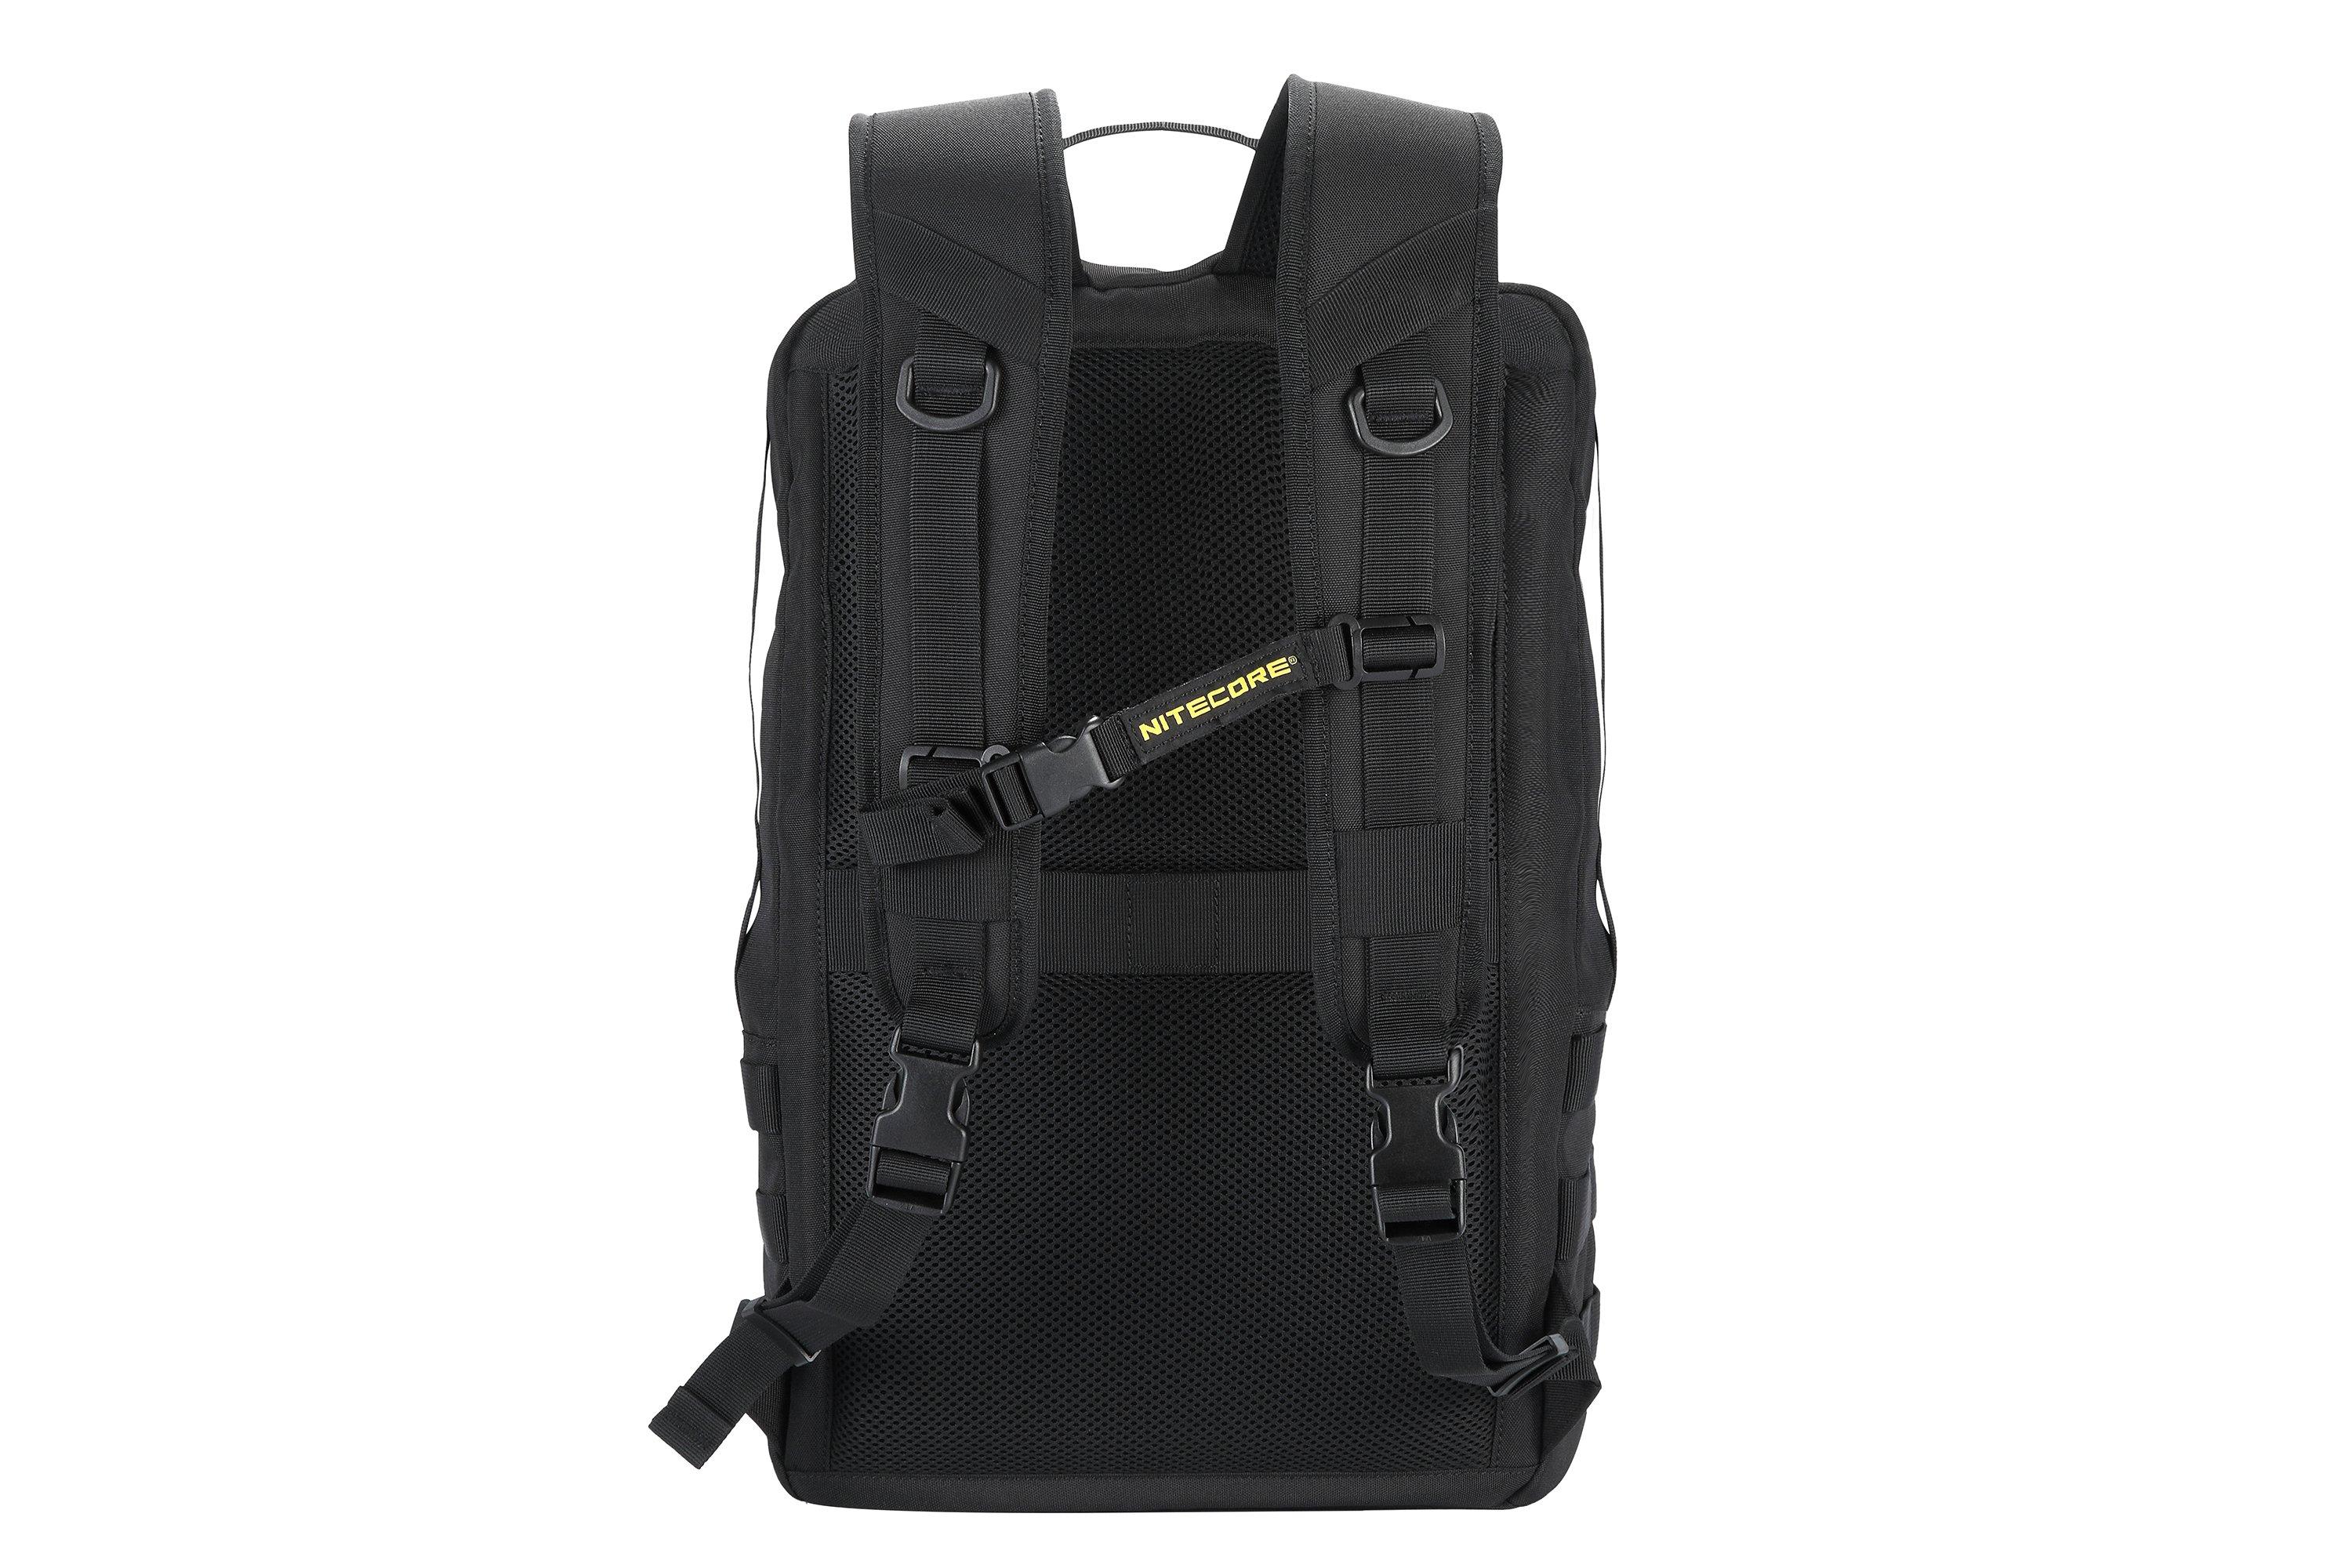  BP23 Multi-purpose Commuting Backpack, black | Advantageously .